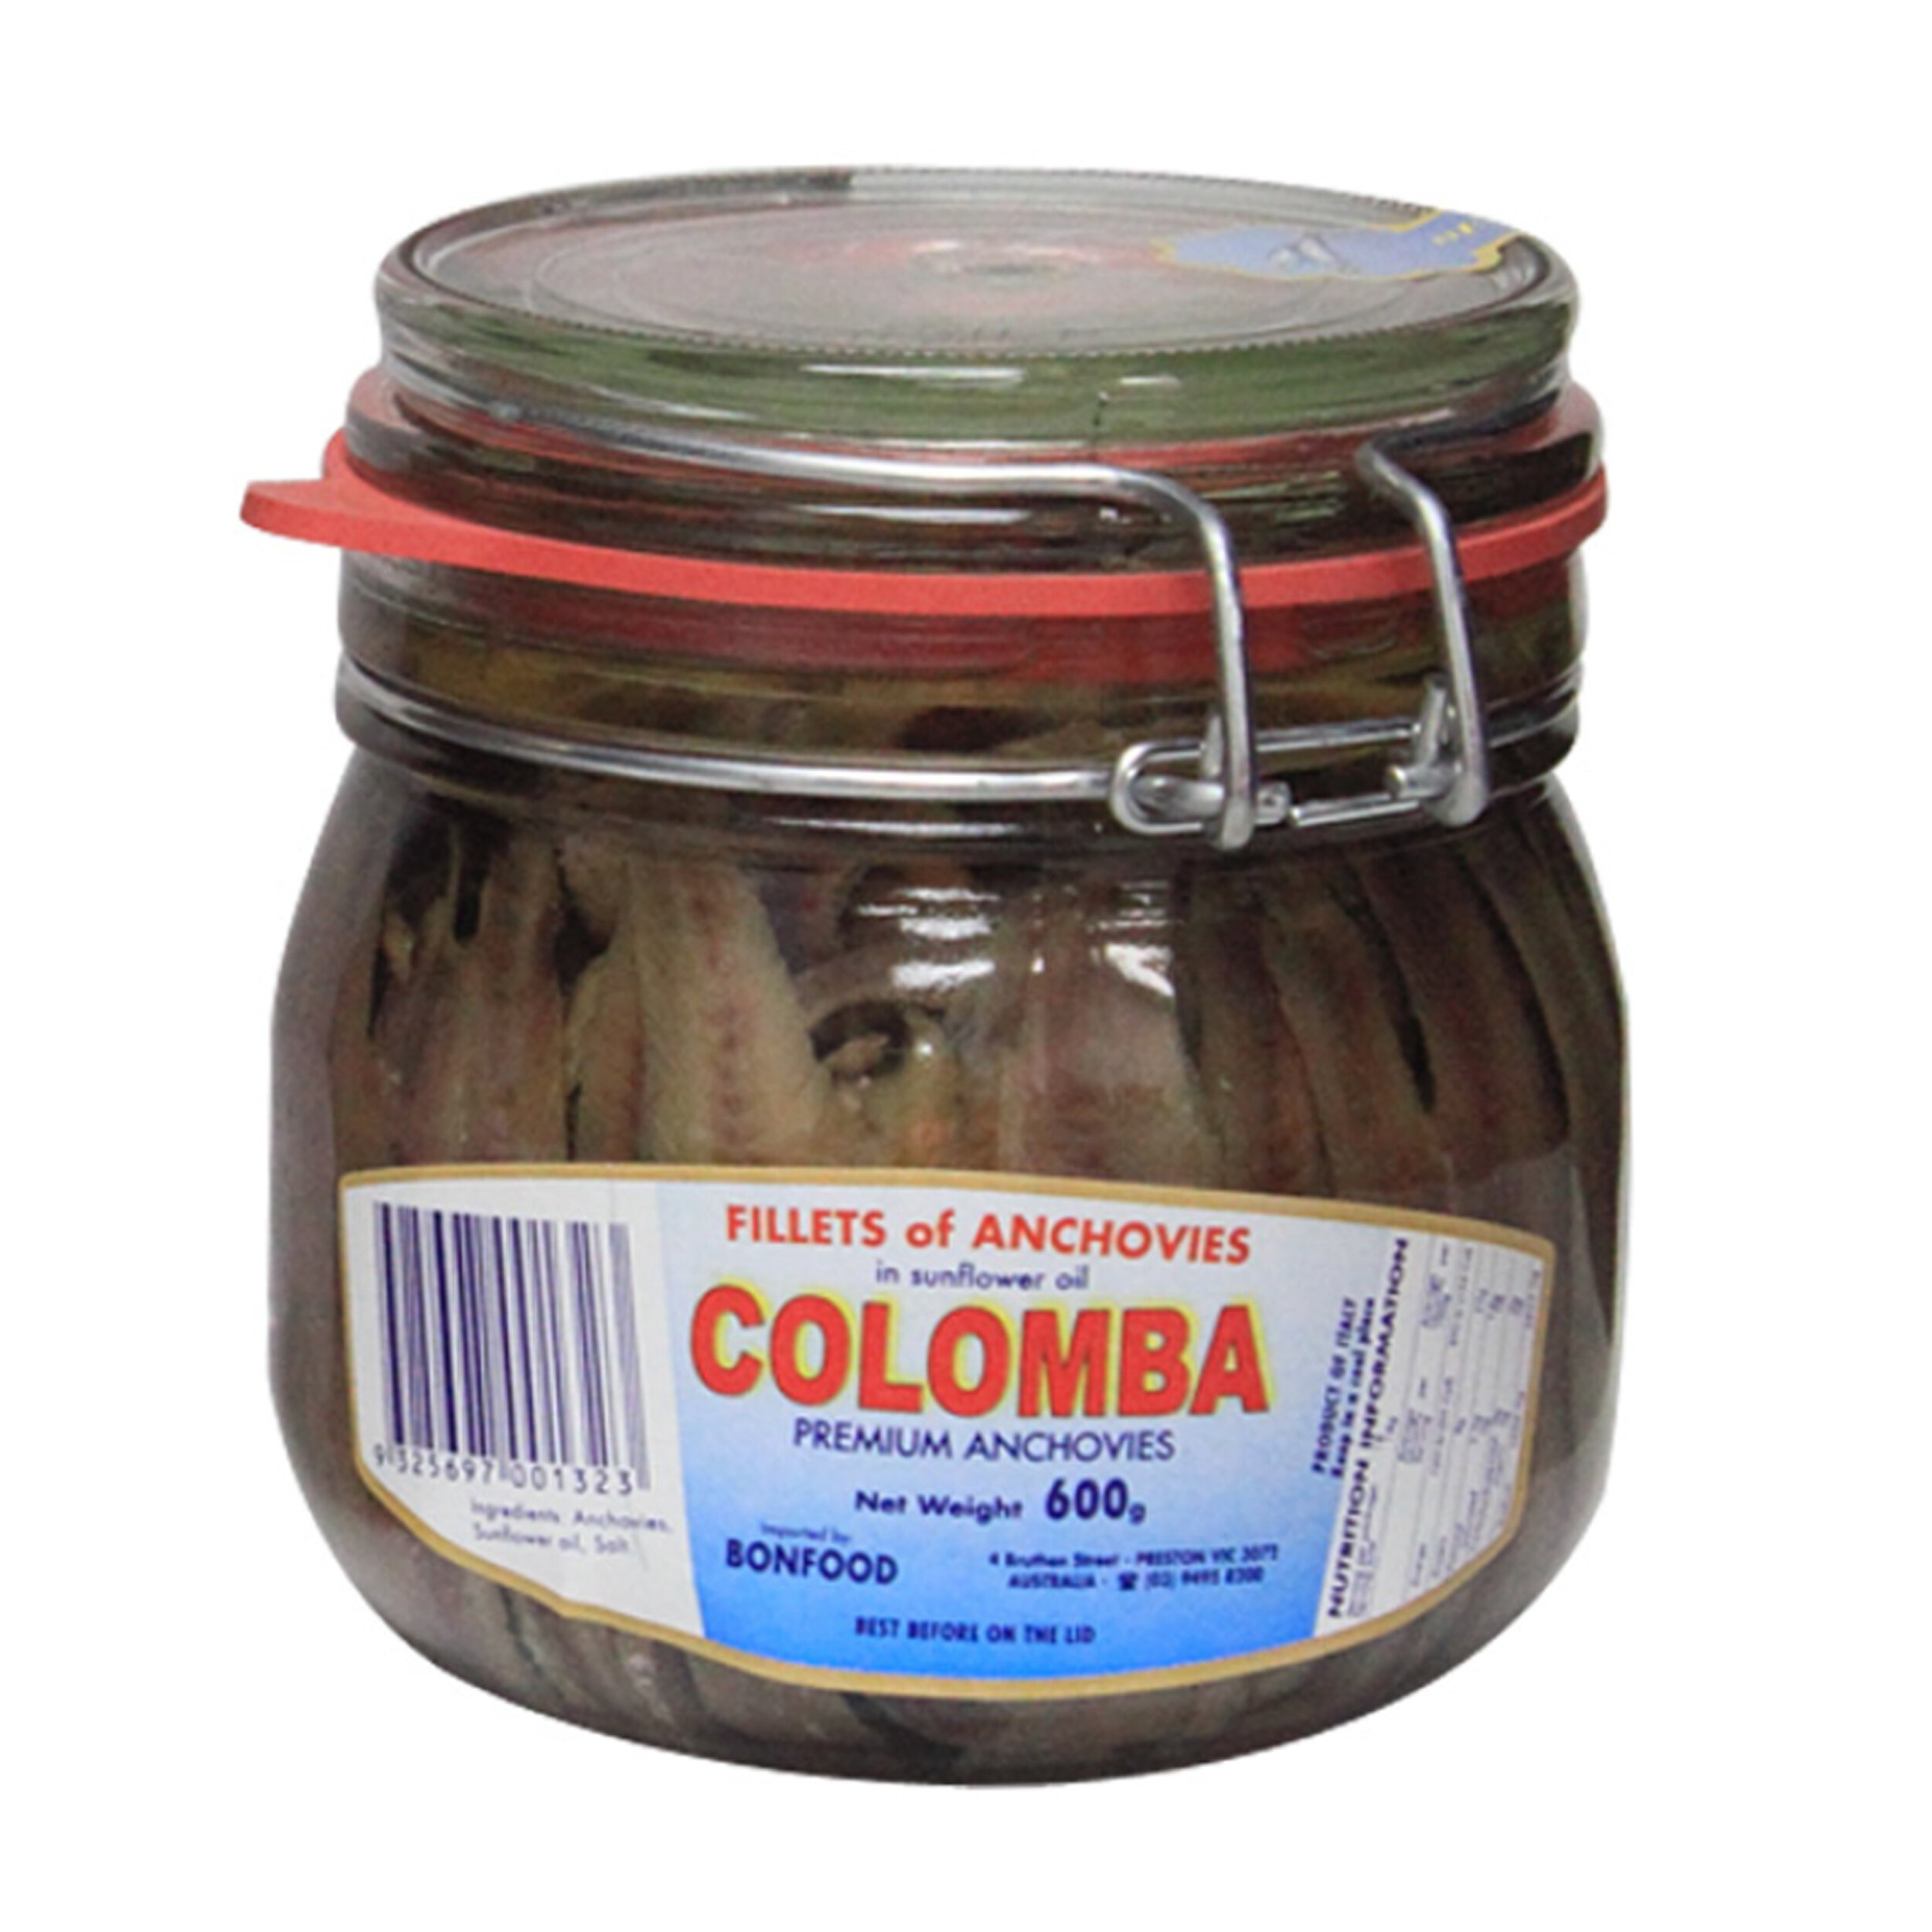 P7- colomba anchovies 600g.jpg